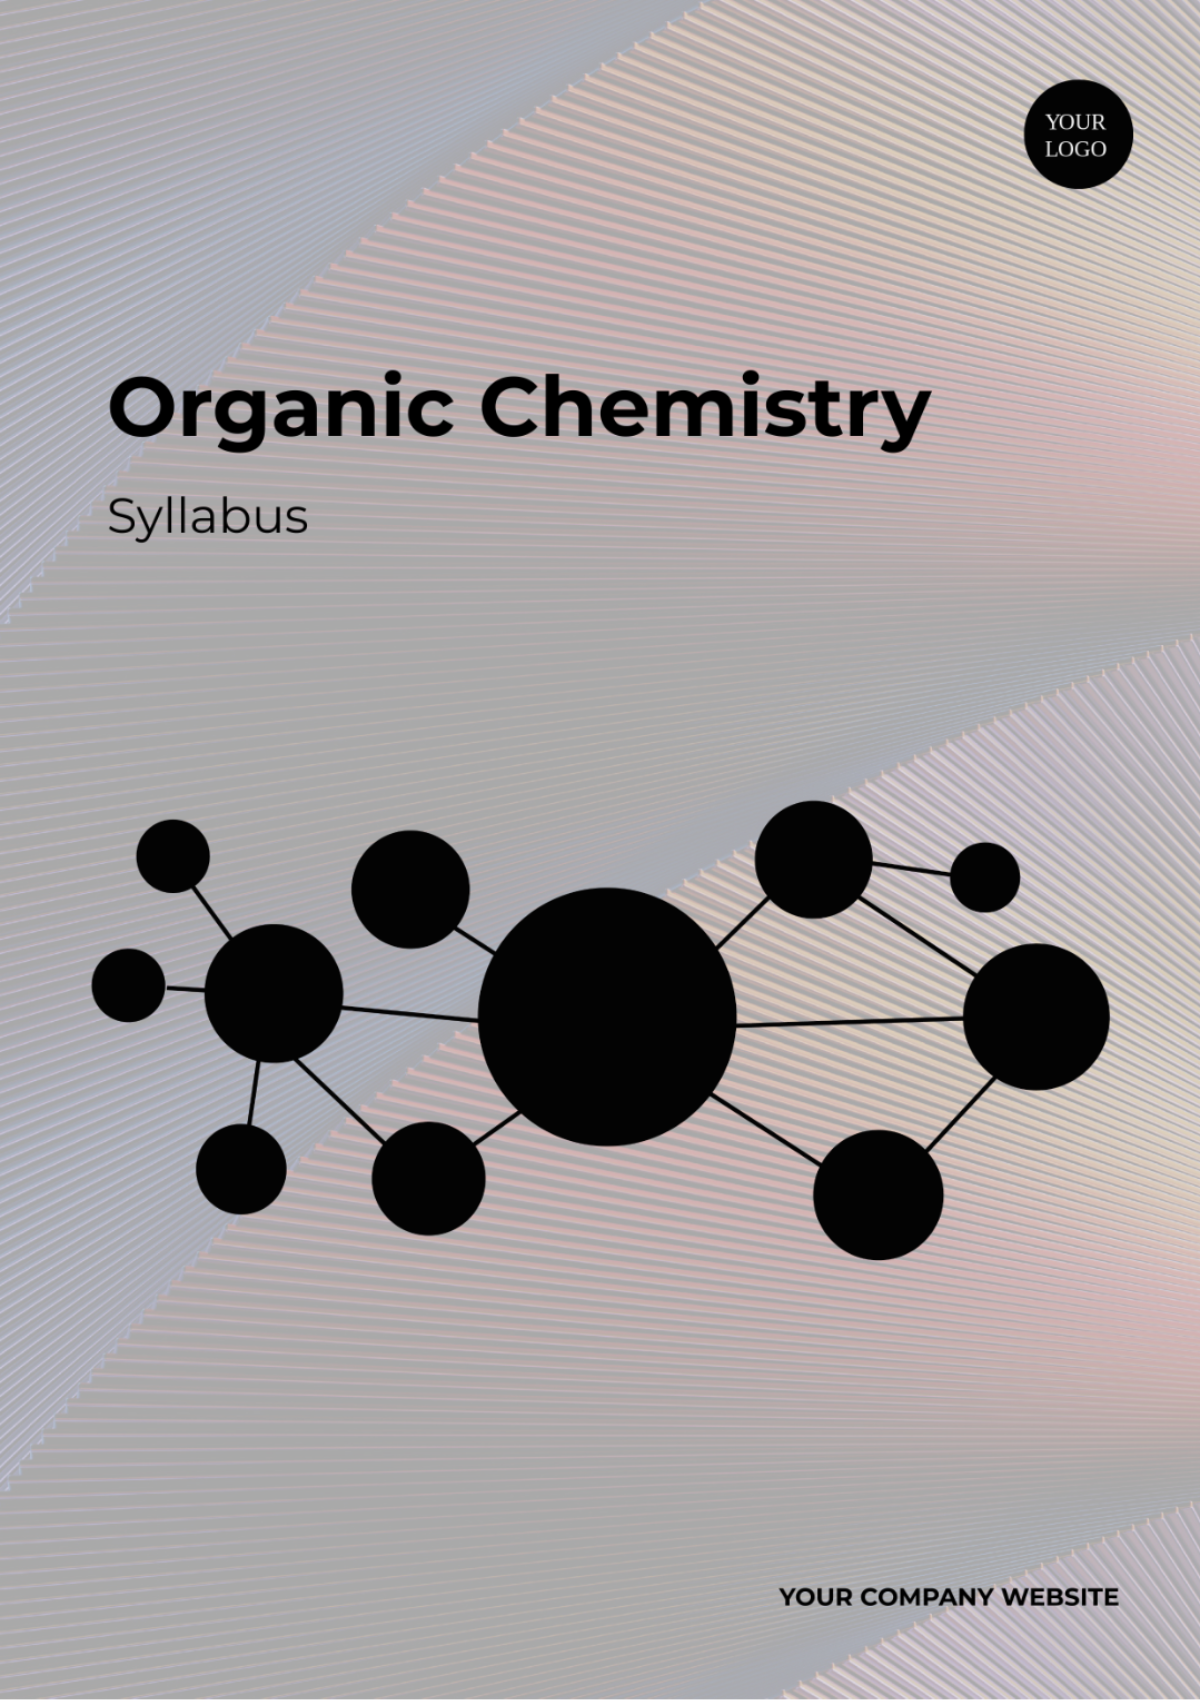 Organic Chemistry Syllabus Template